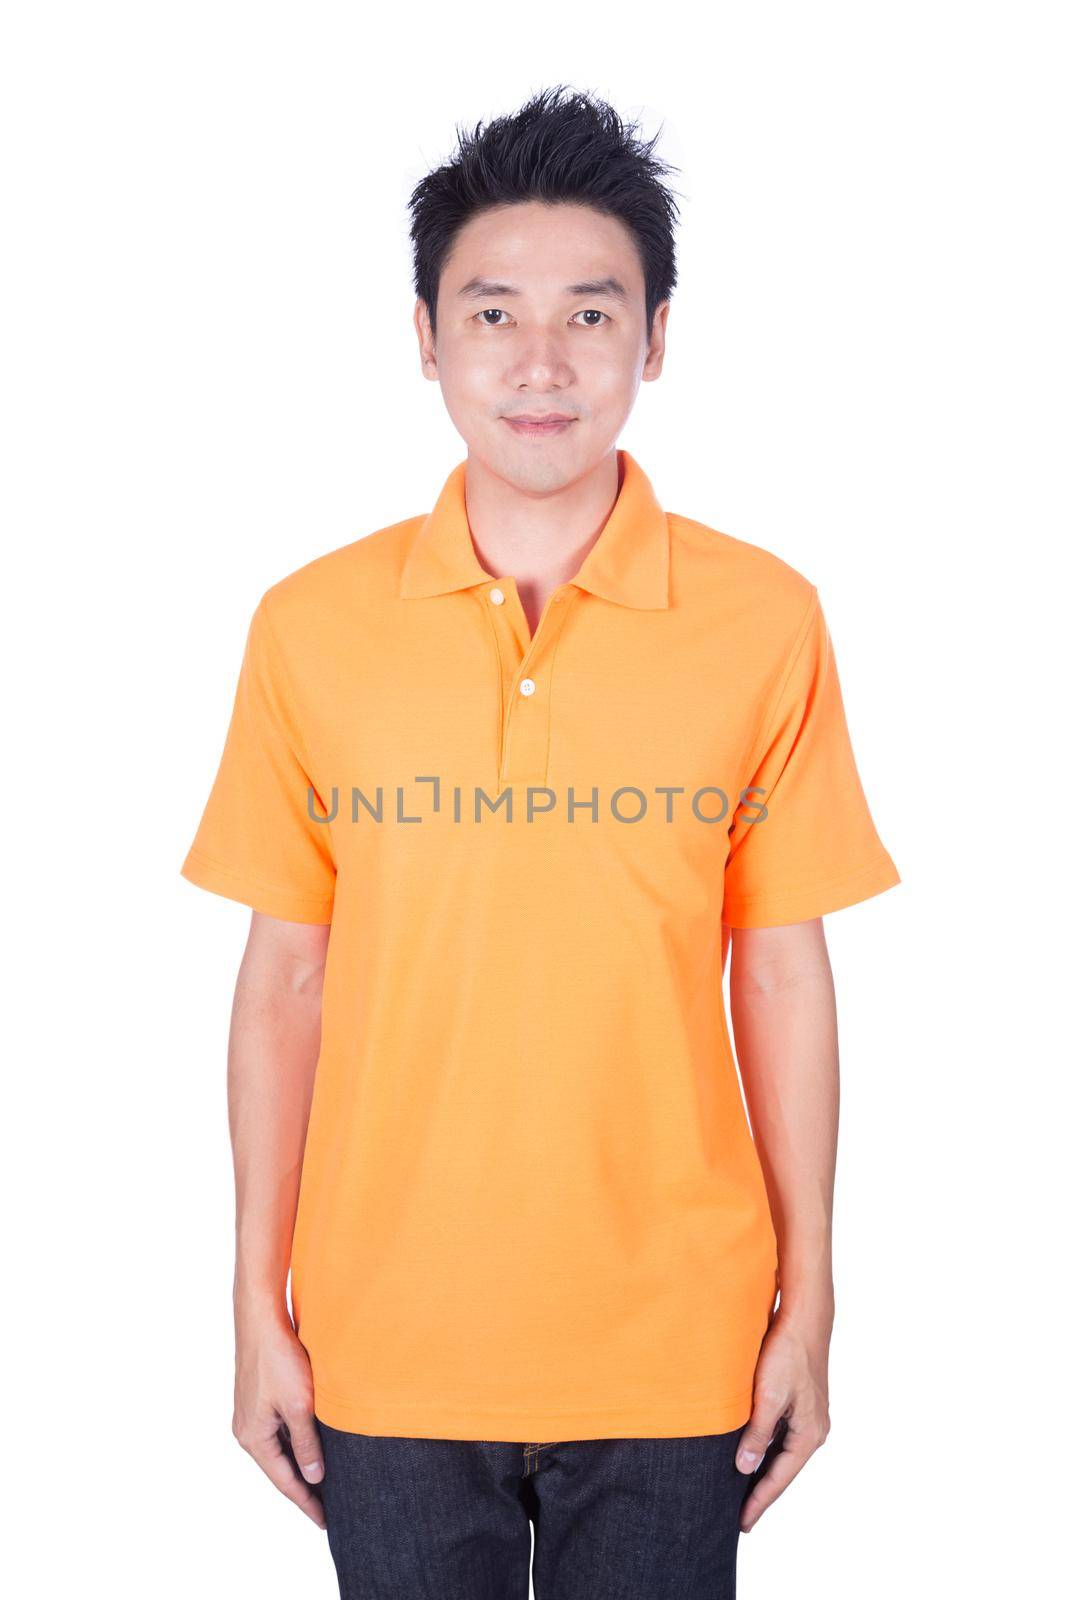 happy man in orange polo shirt isolated on white background